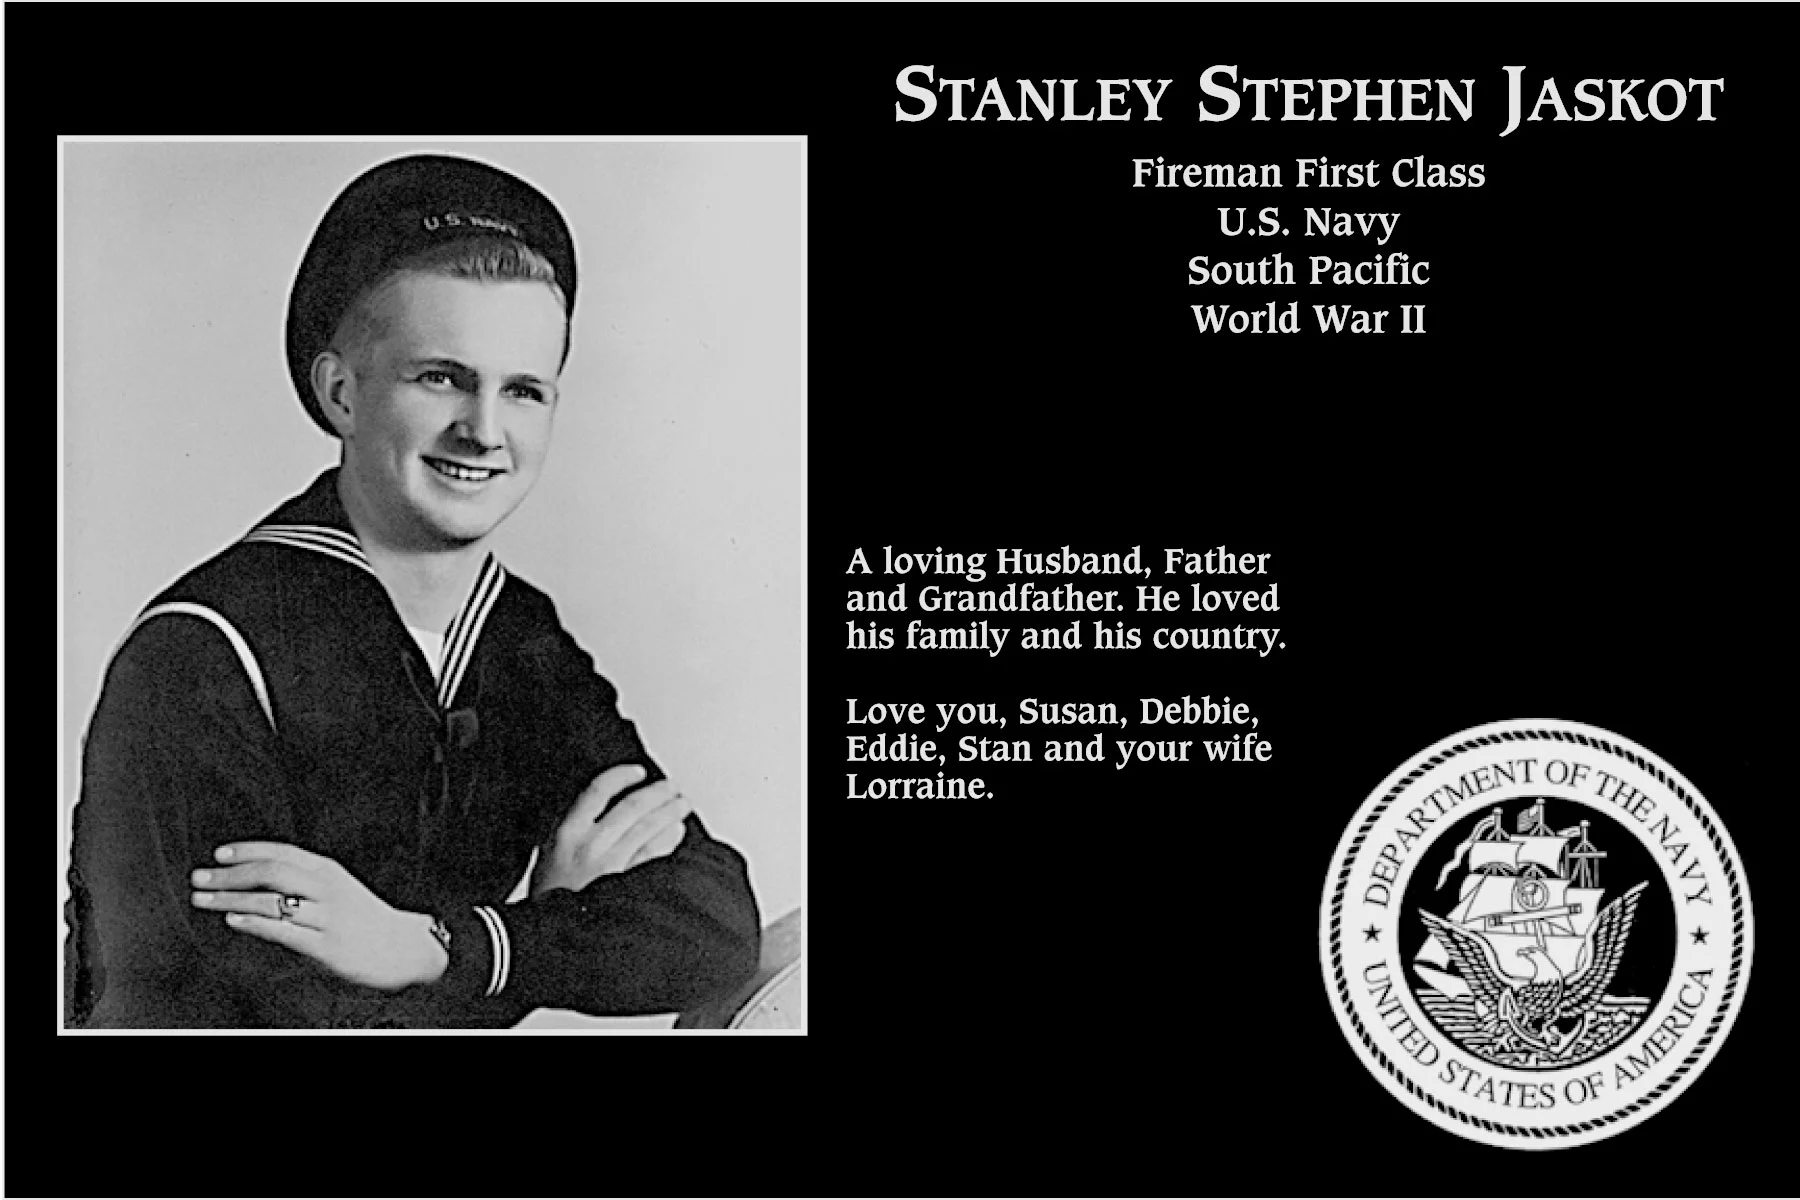 Stanley Stephen Jaskot